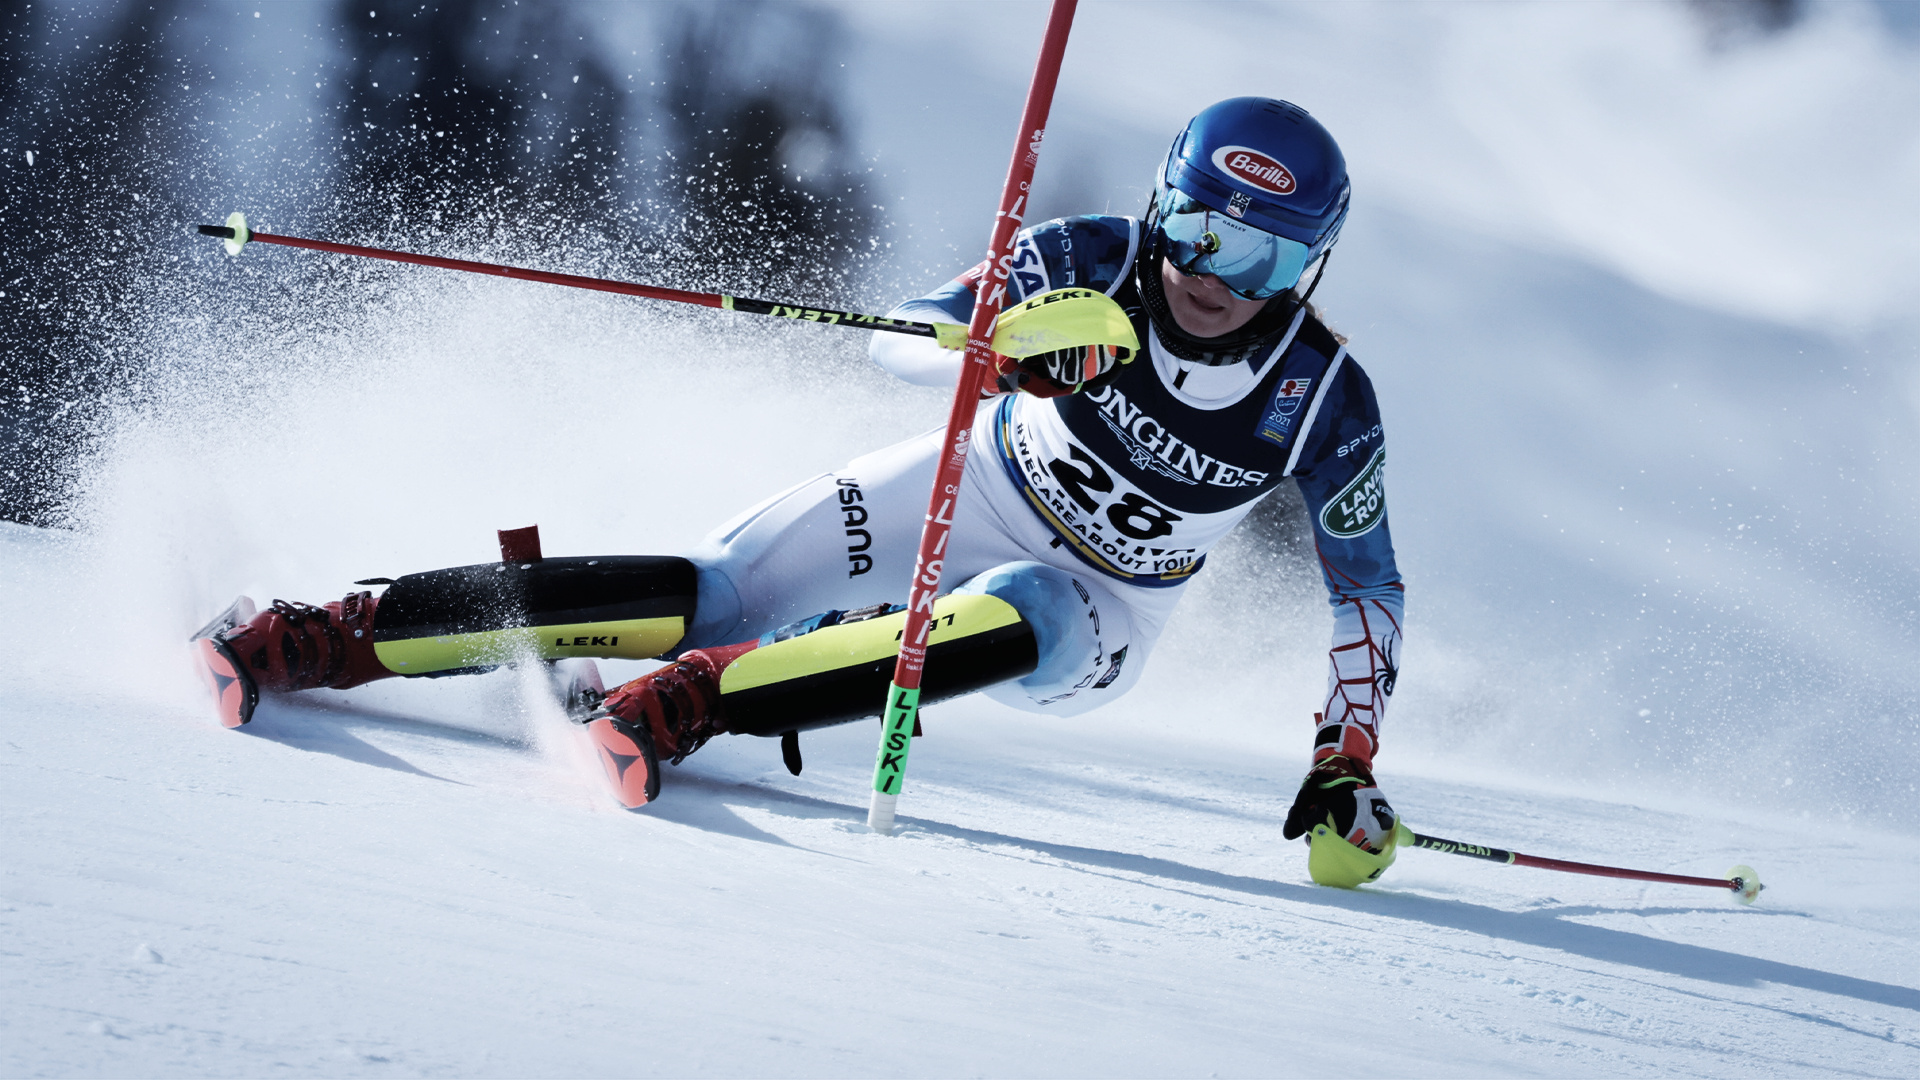 Alpine Skiing: Discipline involving downhill between poles or gates, Extreme winter sports. 1920x1080 Full HD Wallpaper.